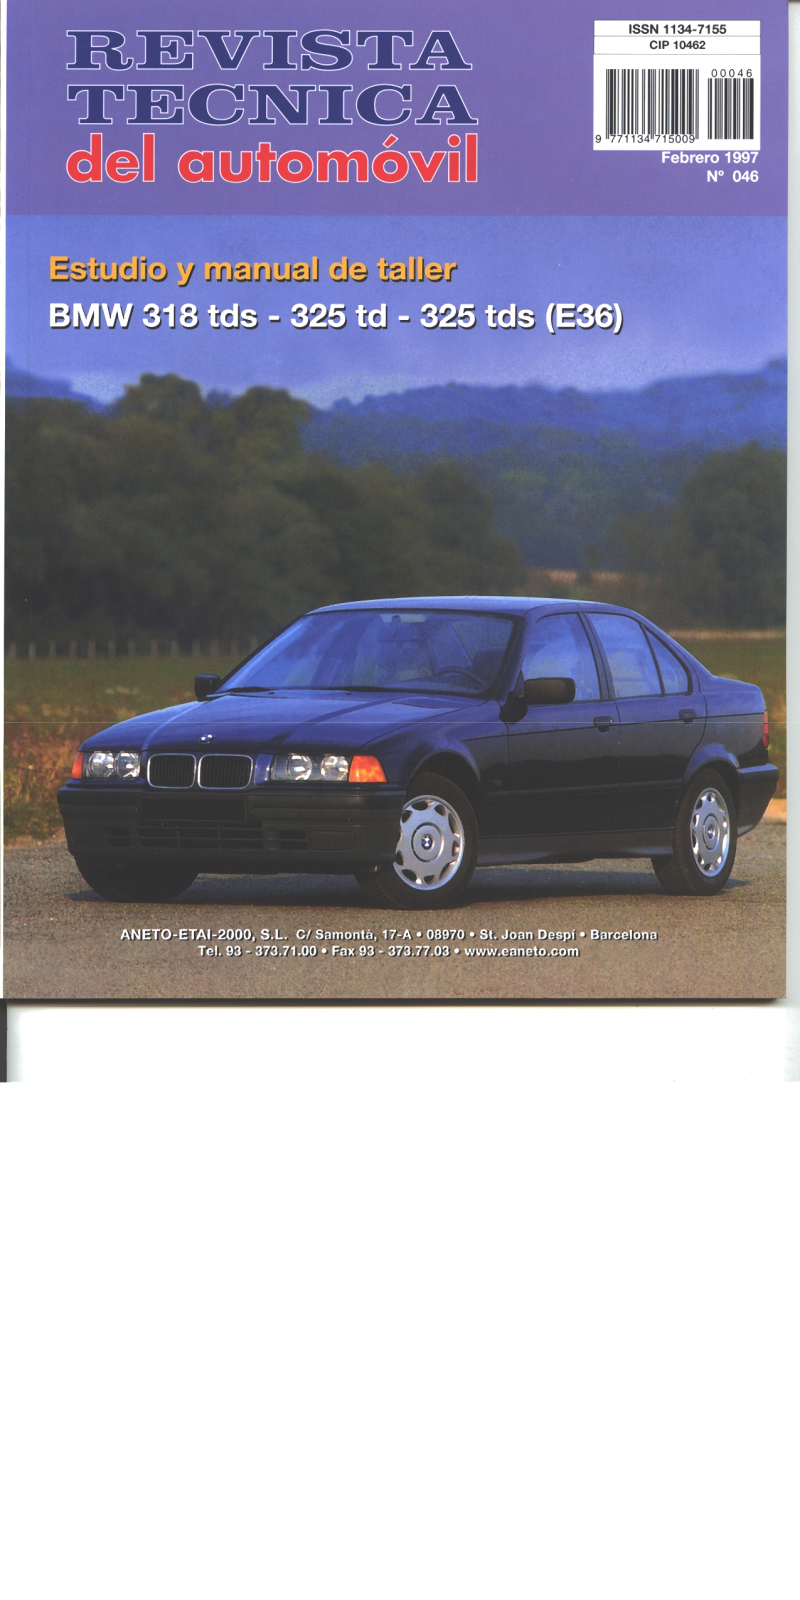 BMW 318tds Service Manual